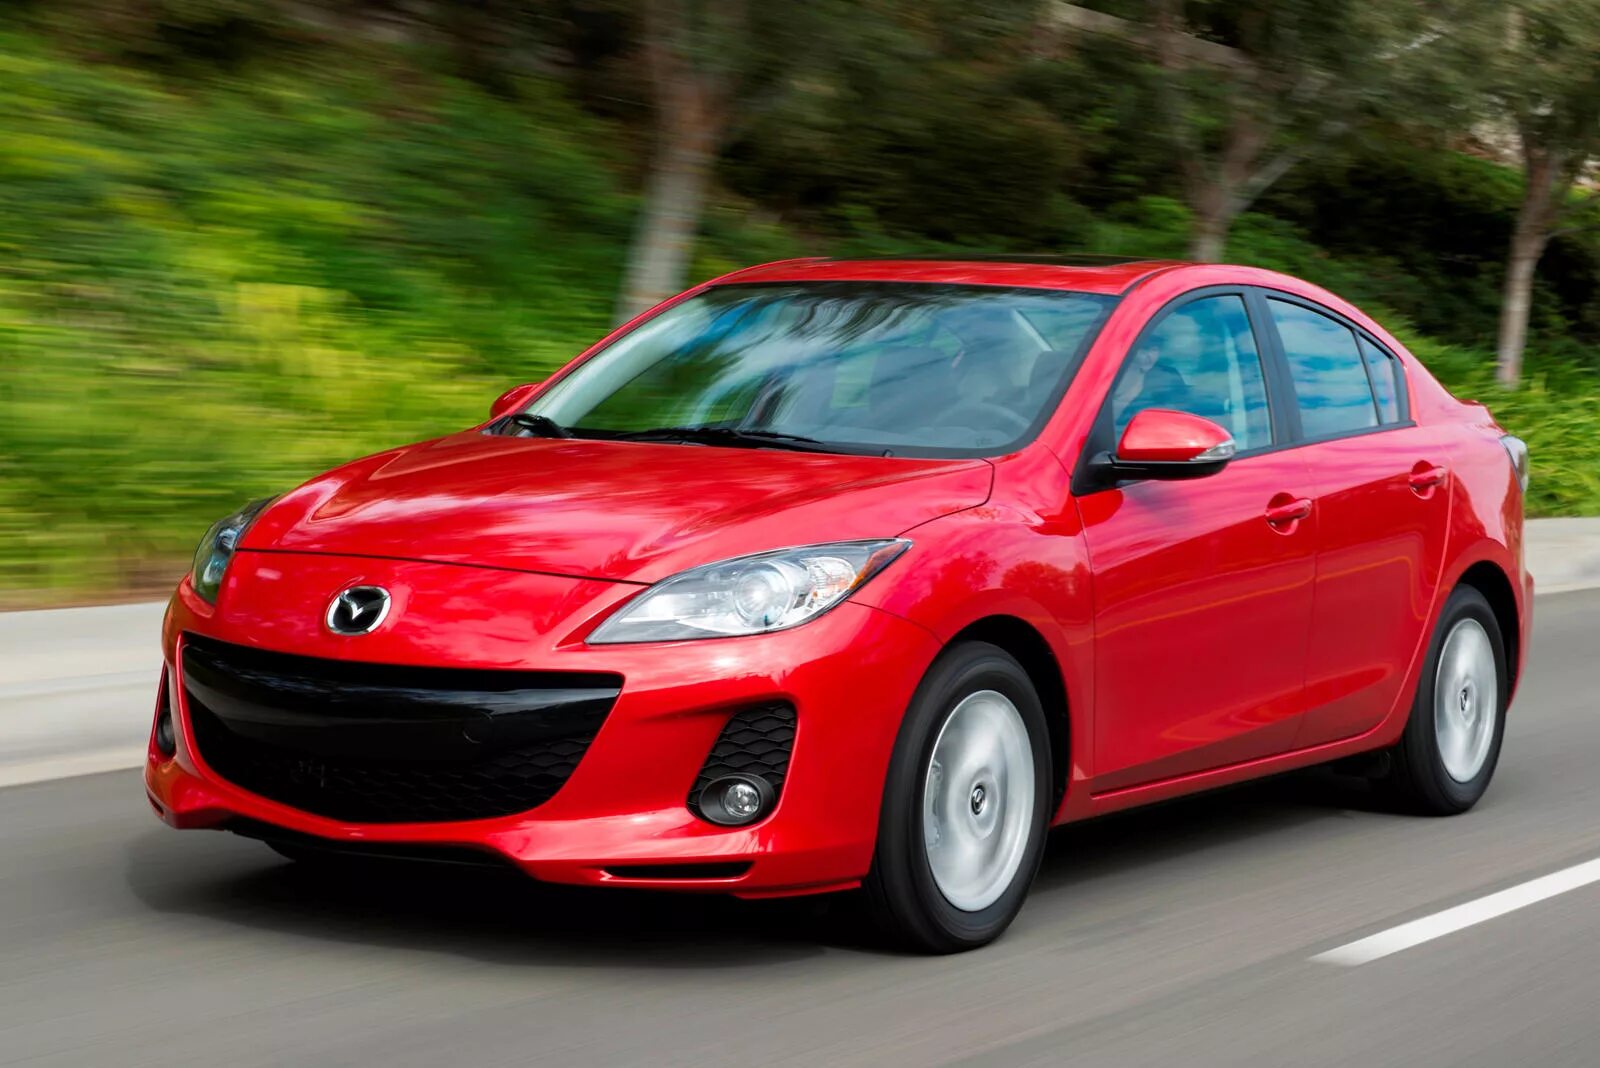 Mazda 3 2013. Мазда 3 седан. Mazda 3 2013 седан. Мазда 3 седан 2013. Mazda 3 3 поколение